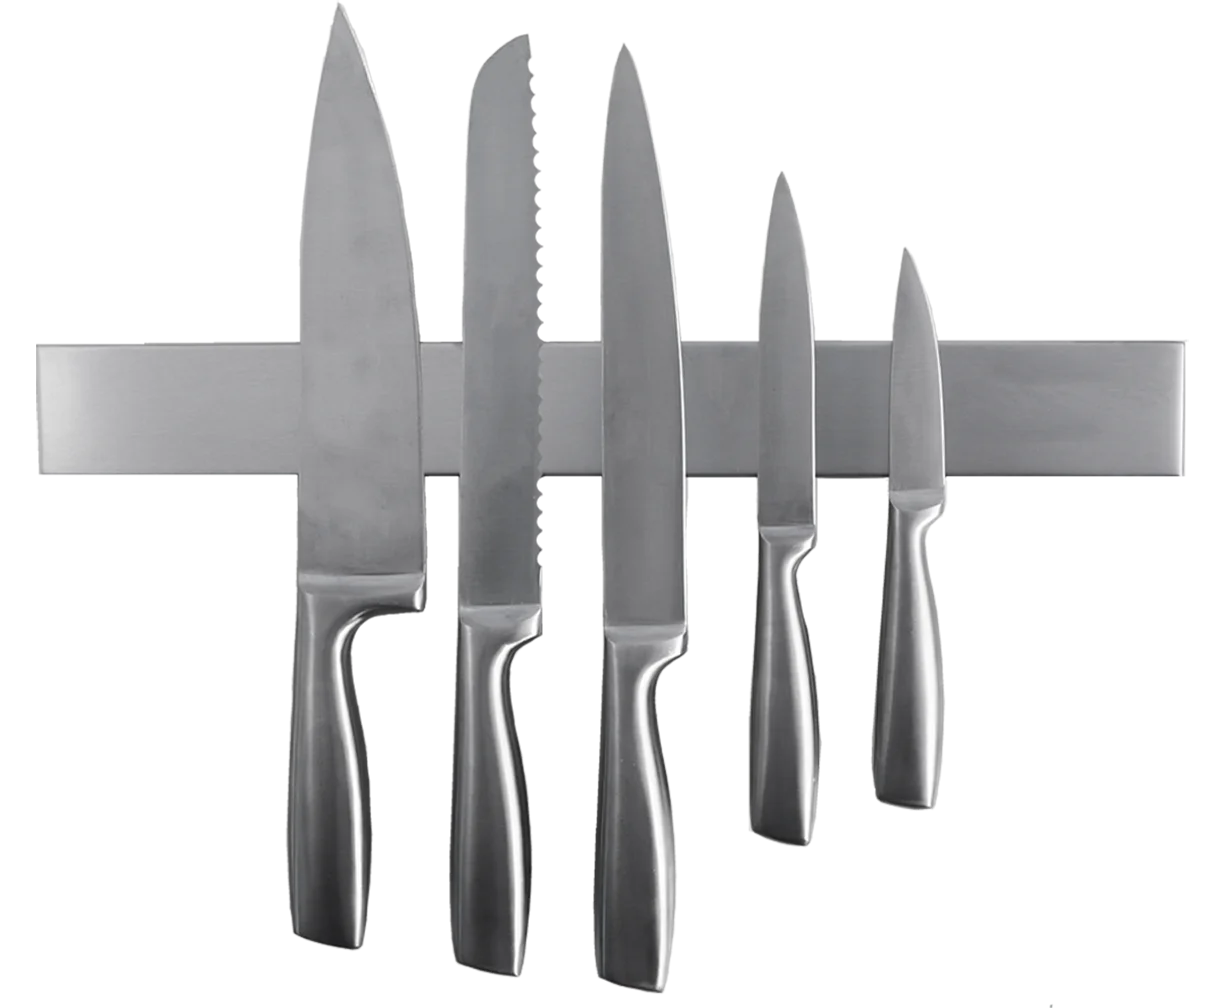 Ножи Kitchen Knife Stainless Steel. Держатель магнитный для ножей hn580. Держатель магнитный fk030m-2 (для ножей, 38 см). 32288 Держатель магнитный для ножей. Купить нержавеющий нож